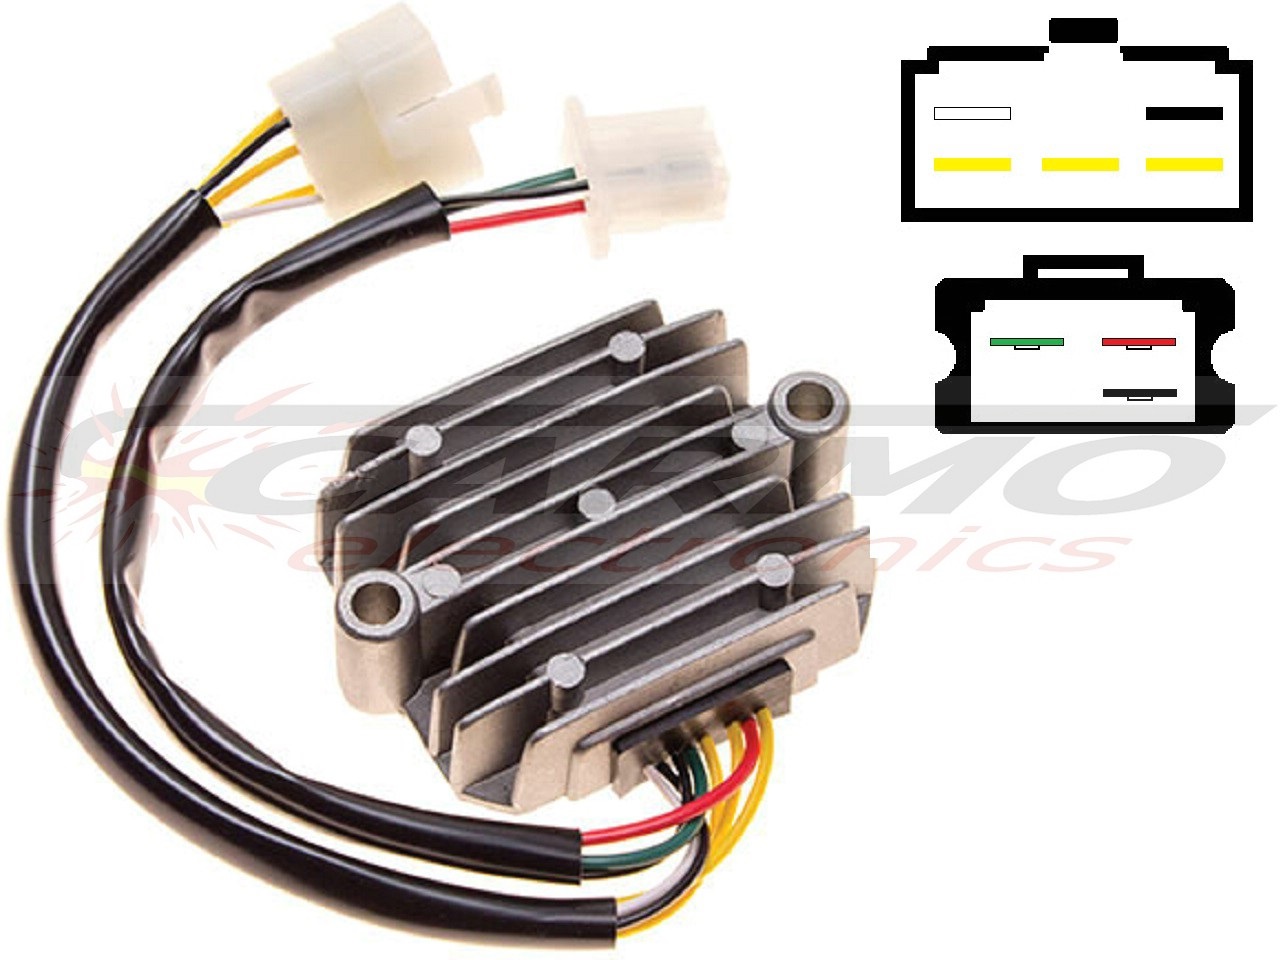 CARR221 - Honda MOSFET Spanningsregelaar gelijkrichter - 画像をクリックして閉じる